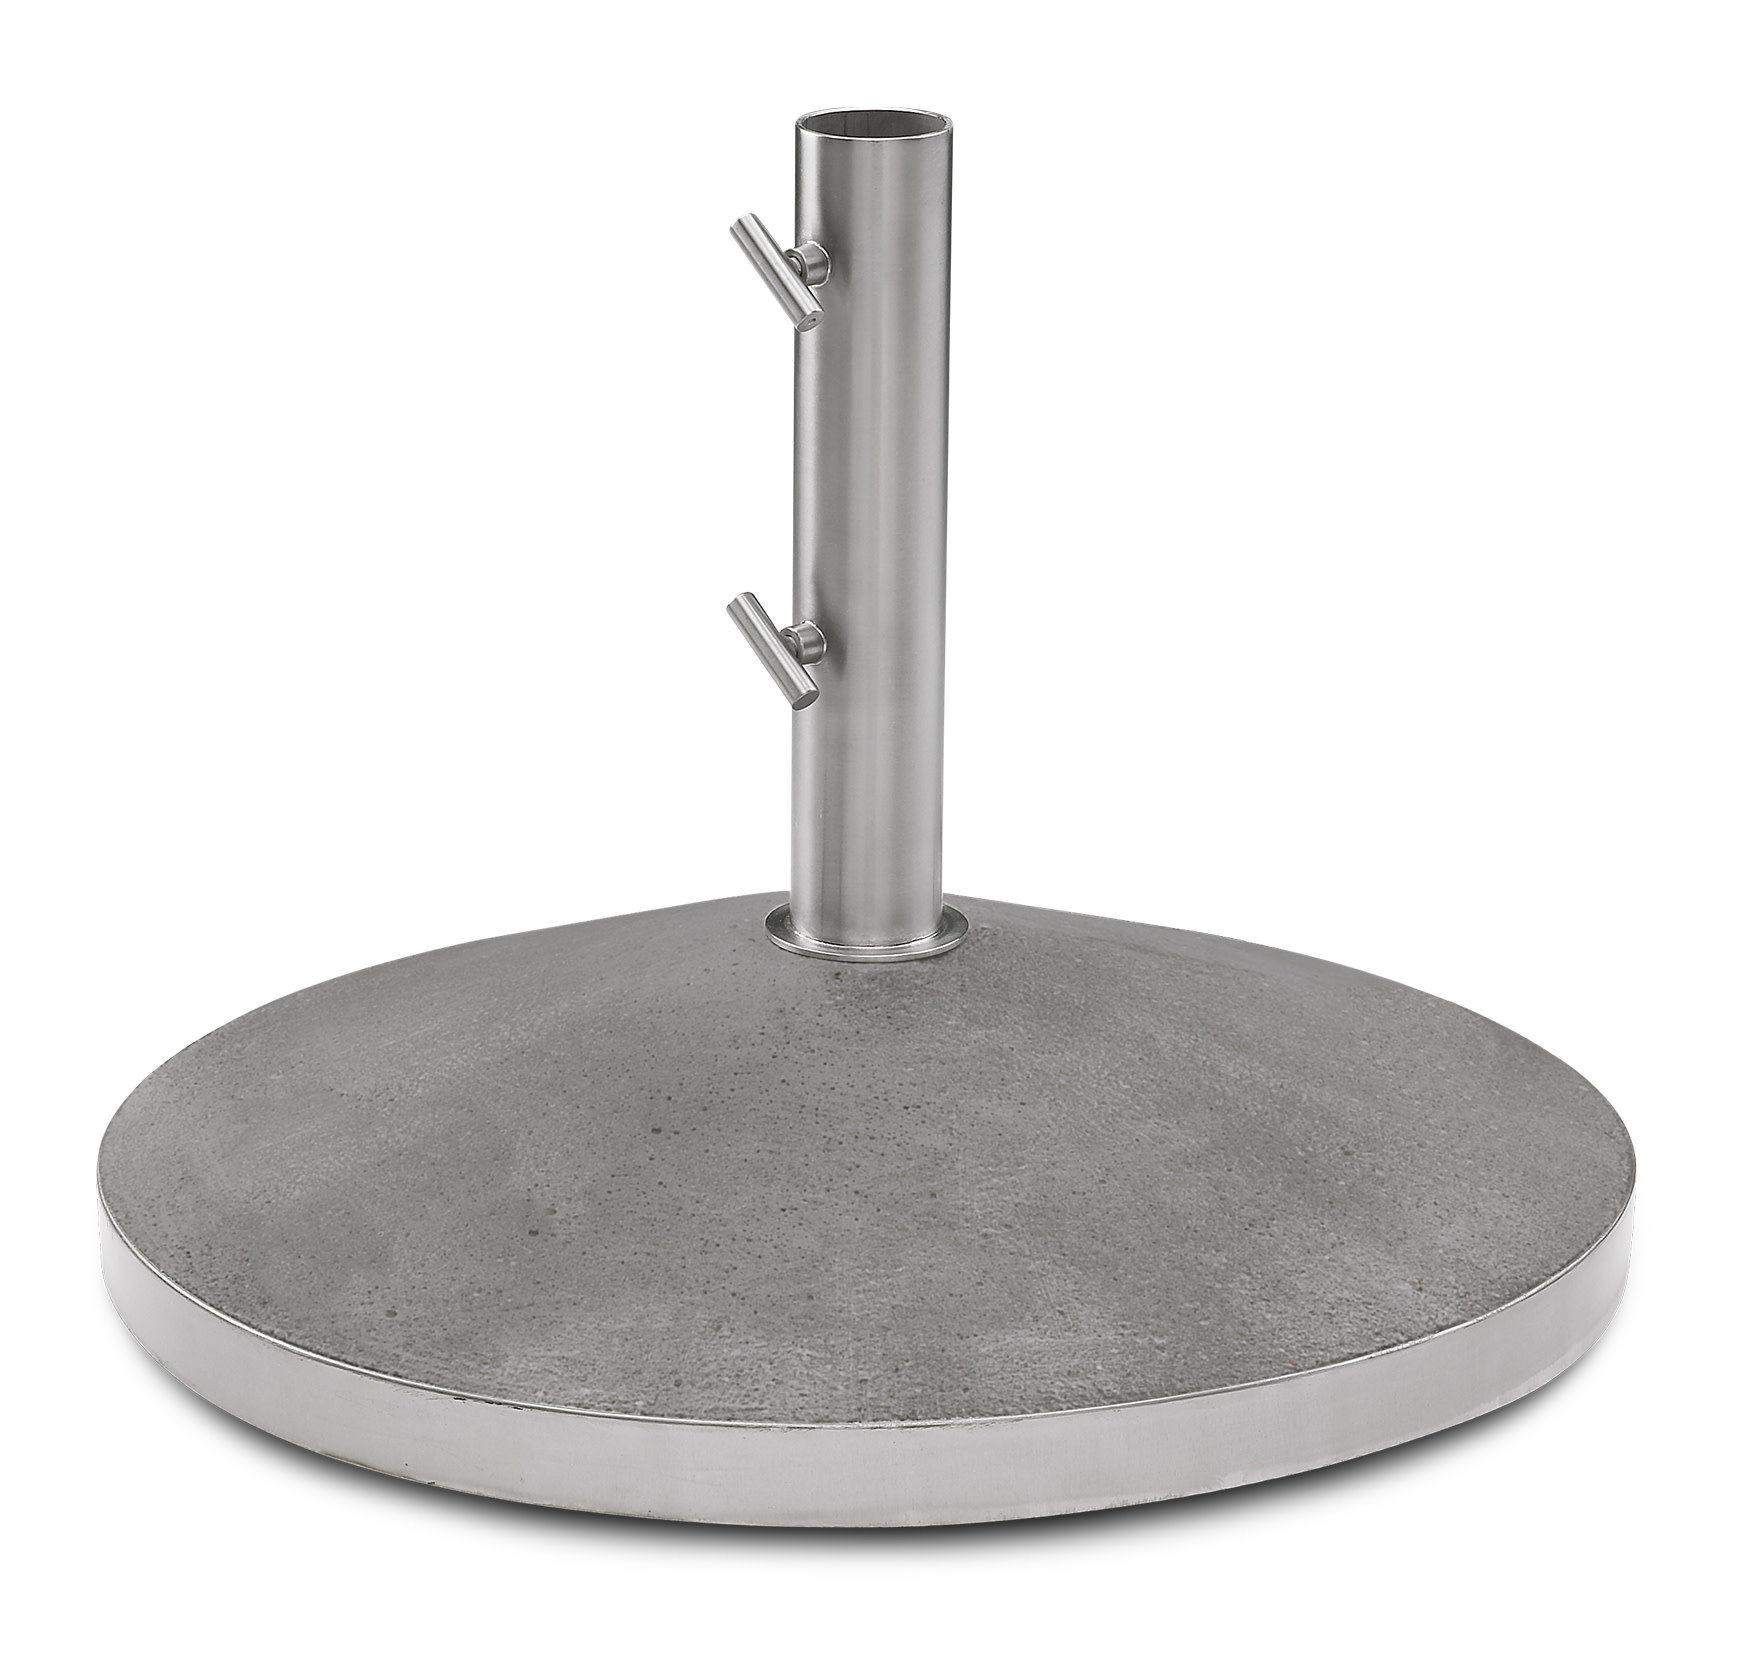 opening Ligatie taart Capri parasolvoet beton 30 kg - vida design